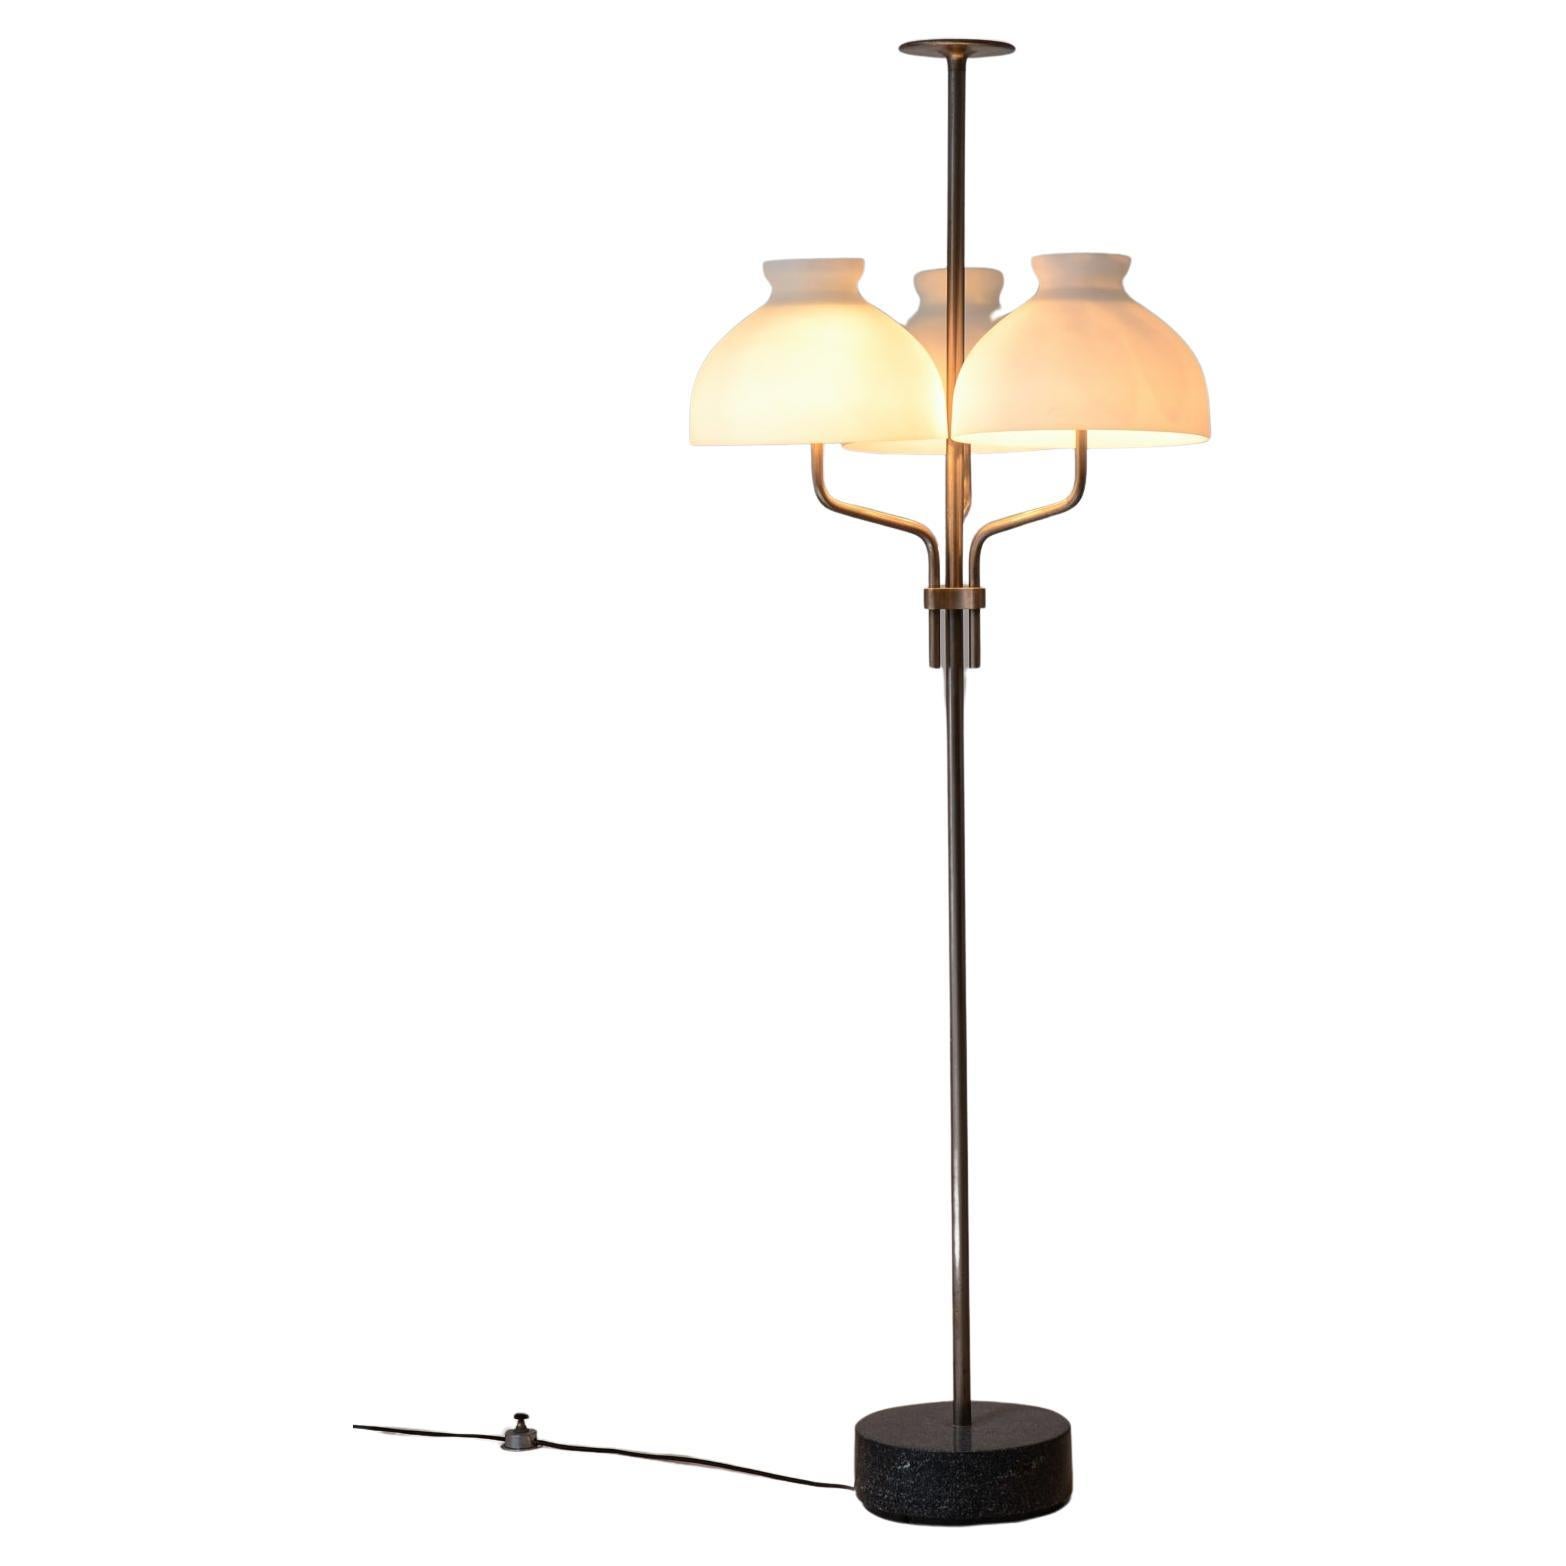 Ignazio Gardella Arenzano model steel floor lamp For Sale